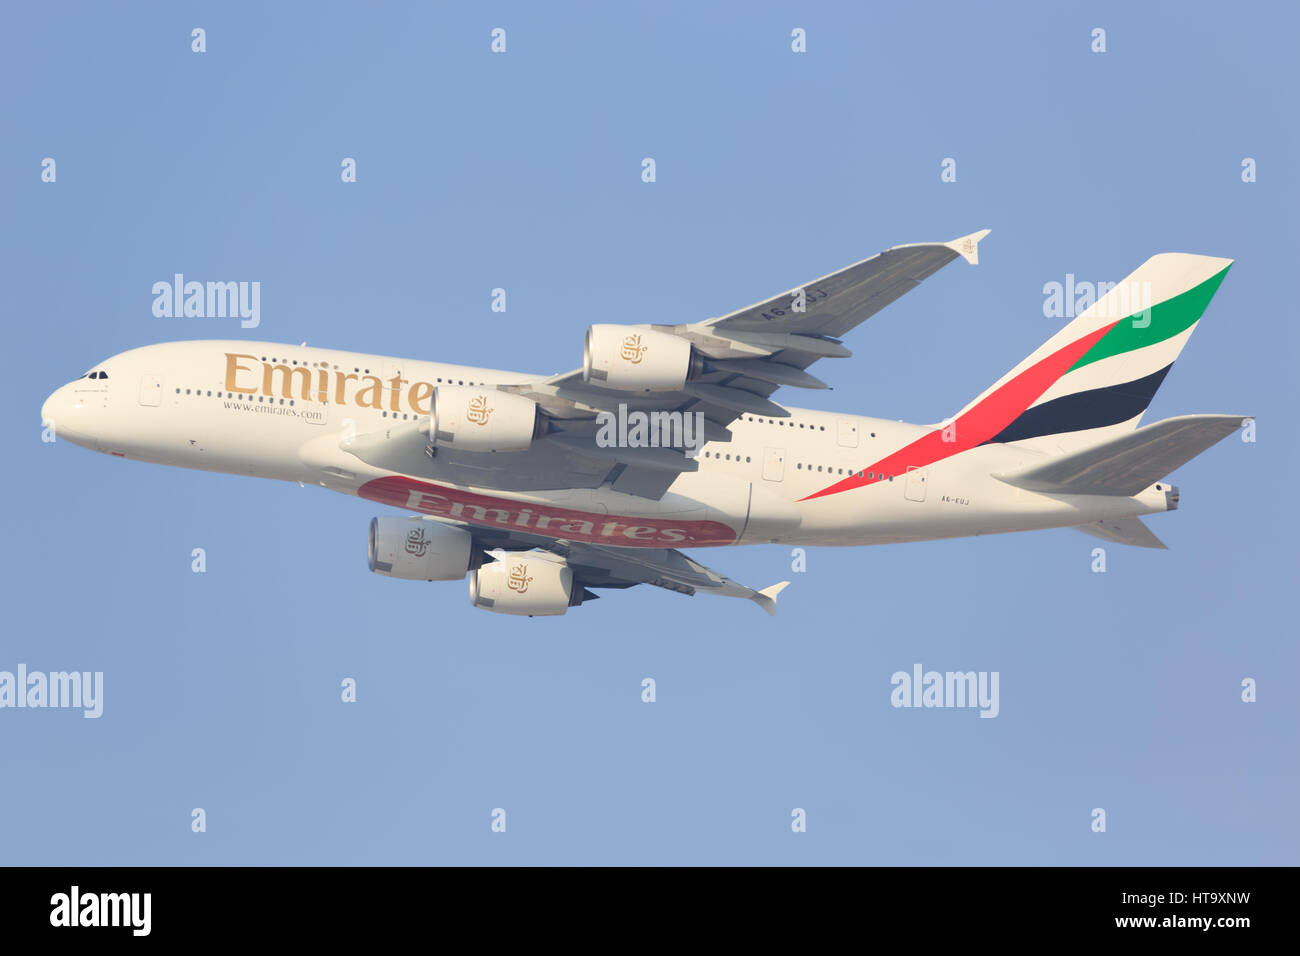 Dubai/UAE March 9, 2017: Airbus A330 from Swis landing at Dubai Airport. Stock Photo